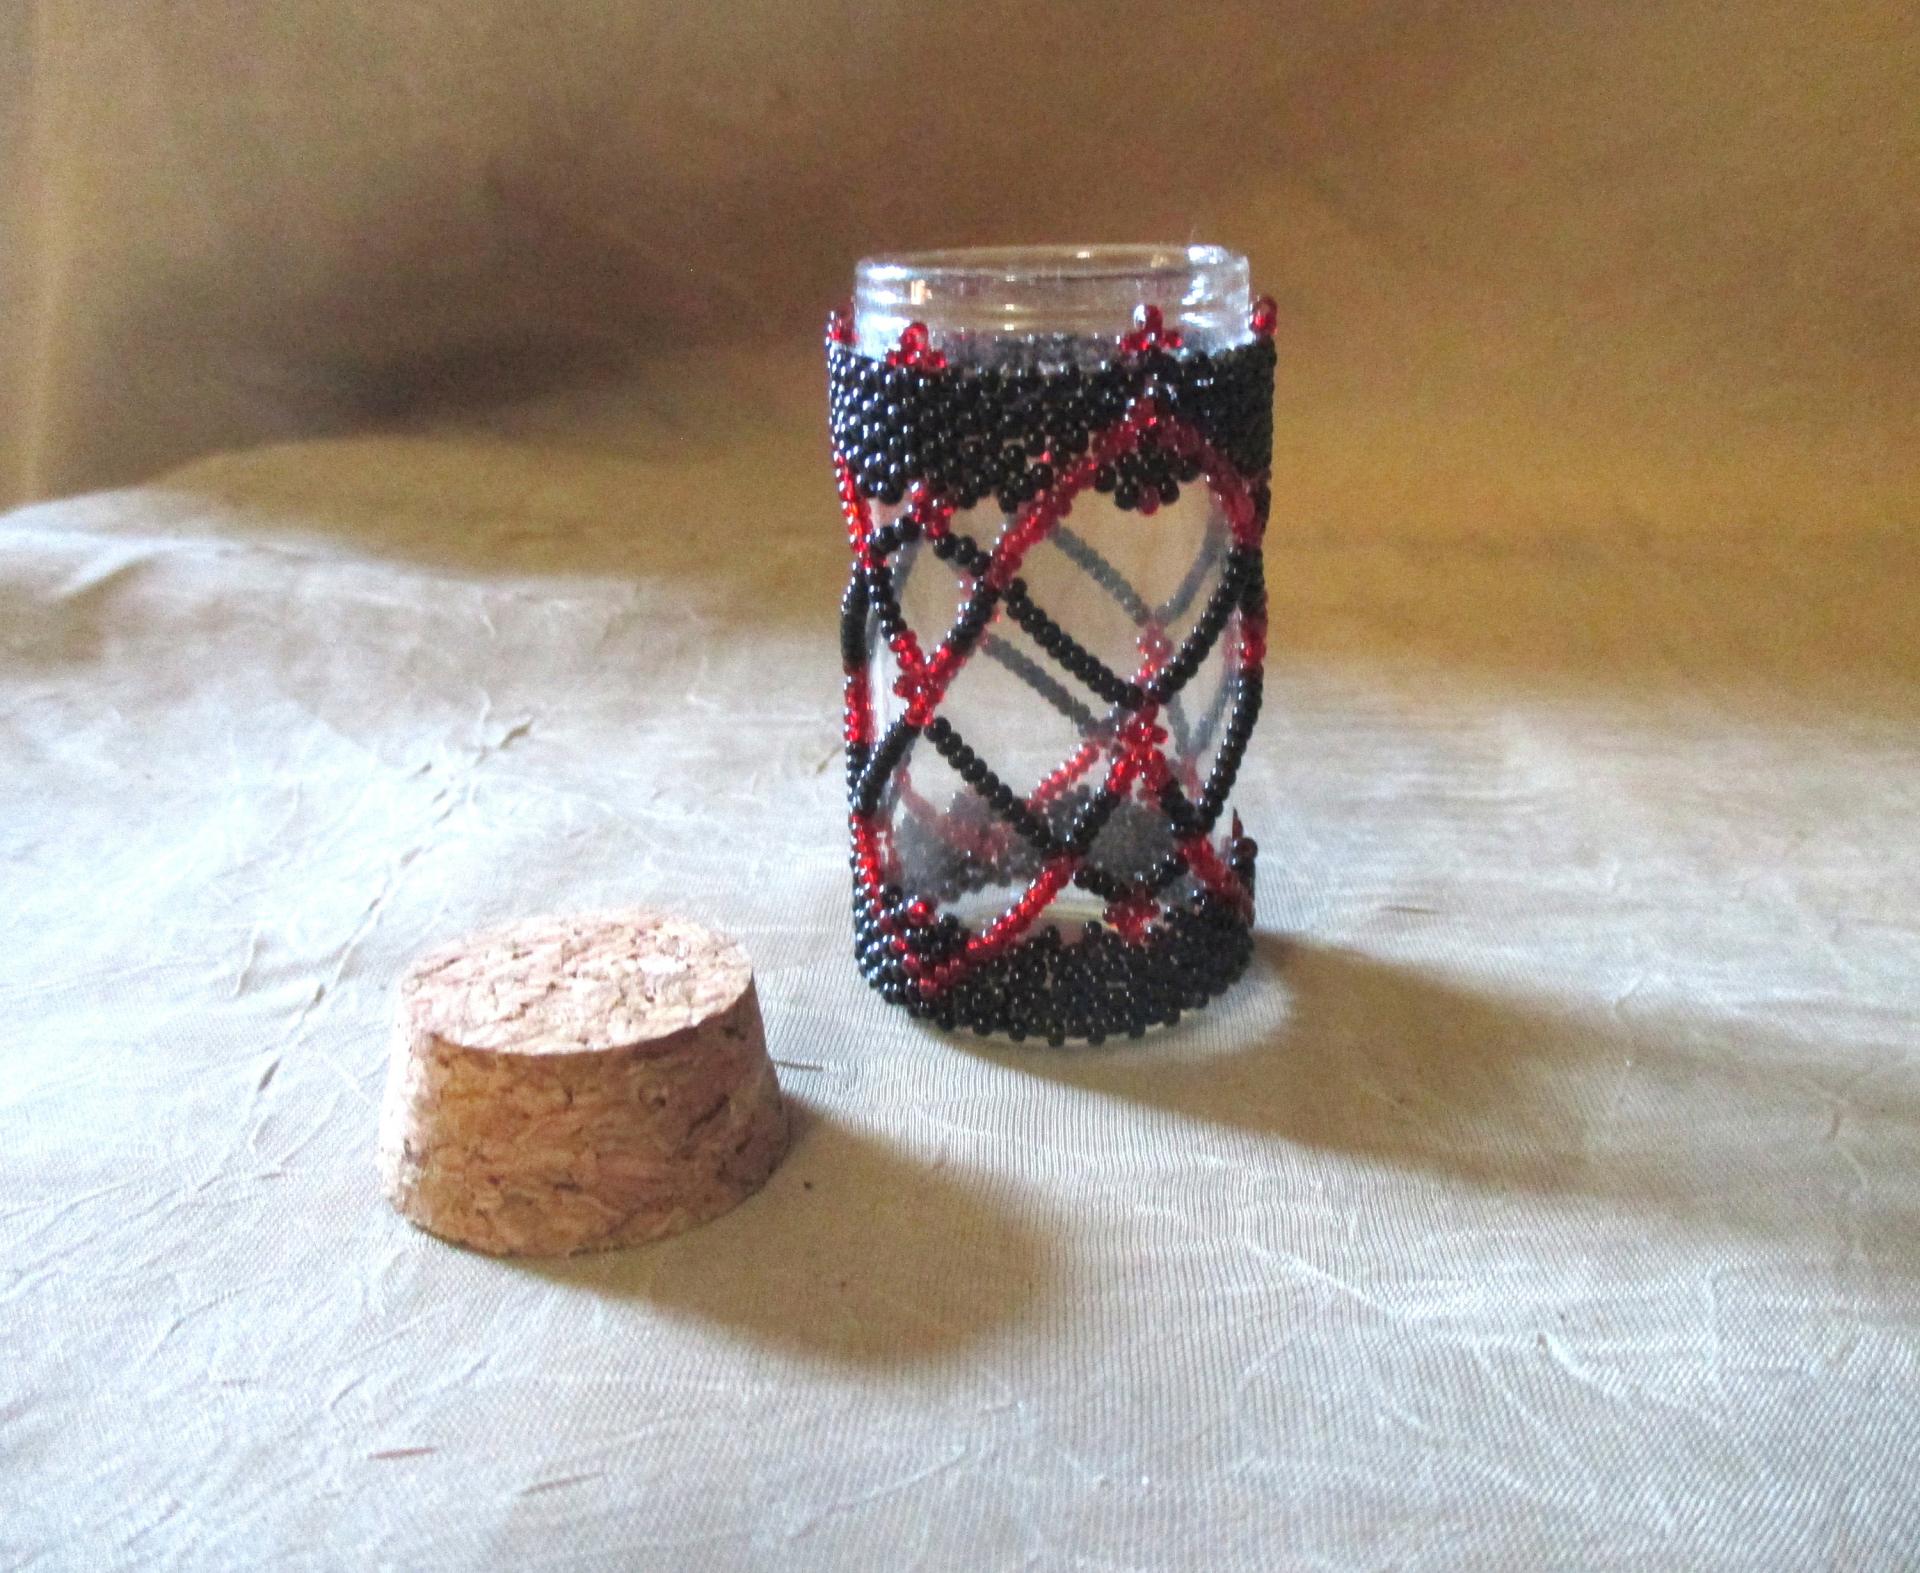 Beaded Jar with Cork - Handmade Bead Wrapped Glass Jar